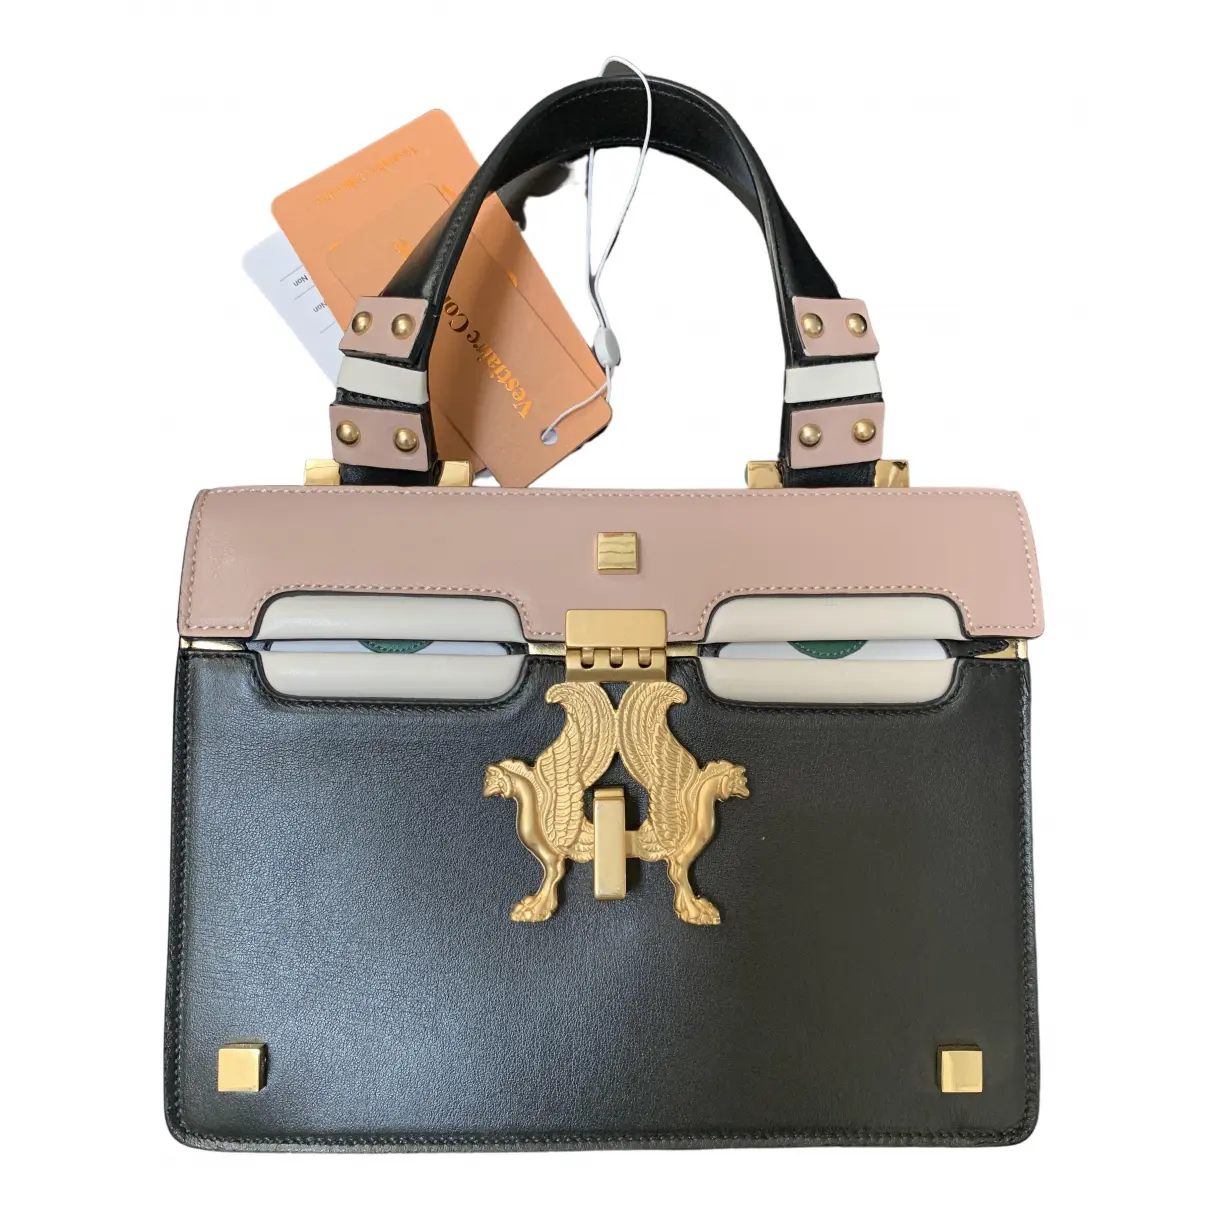 Patent leather handbag Giancarlo Petriglia